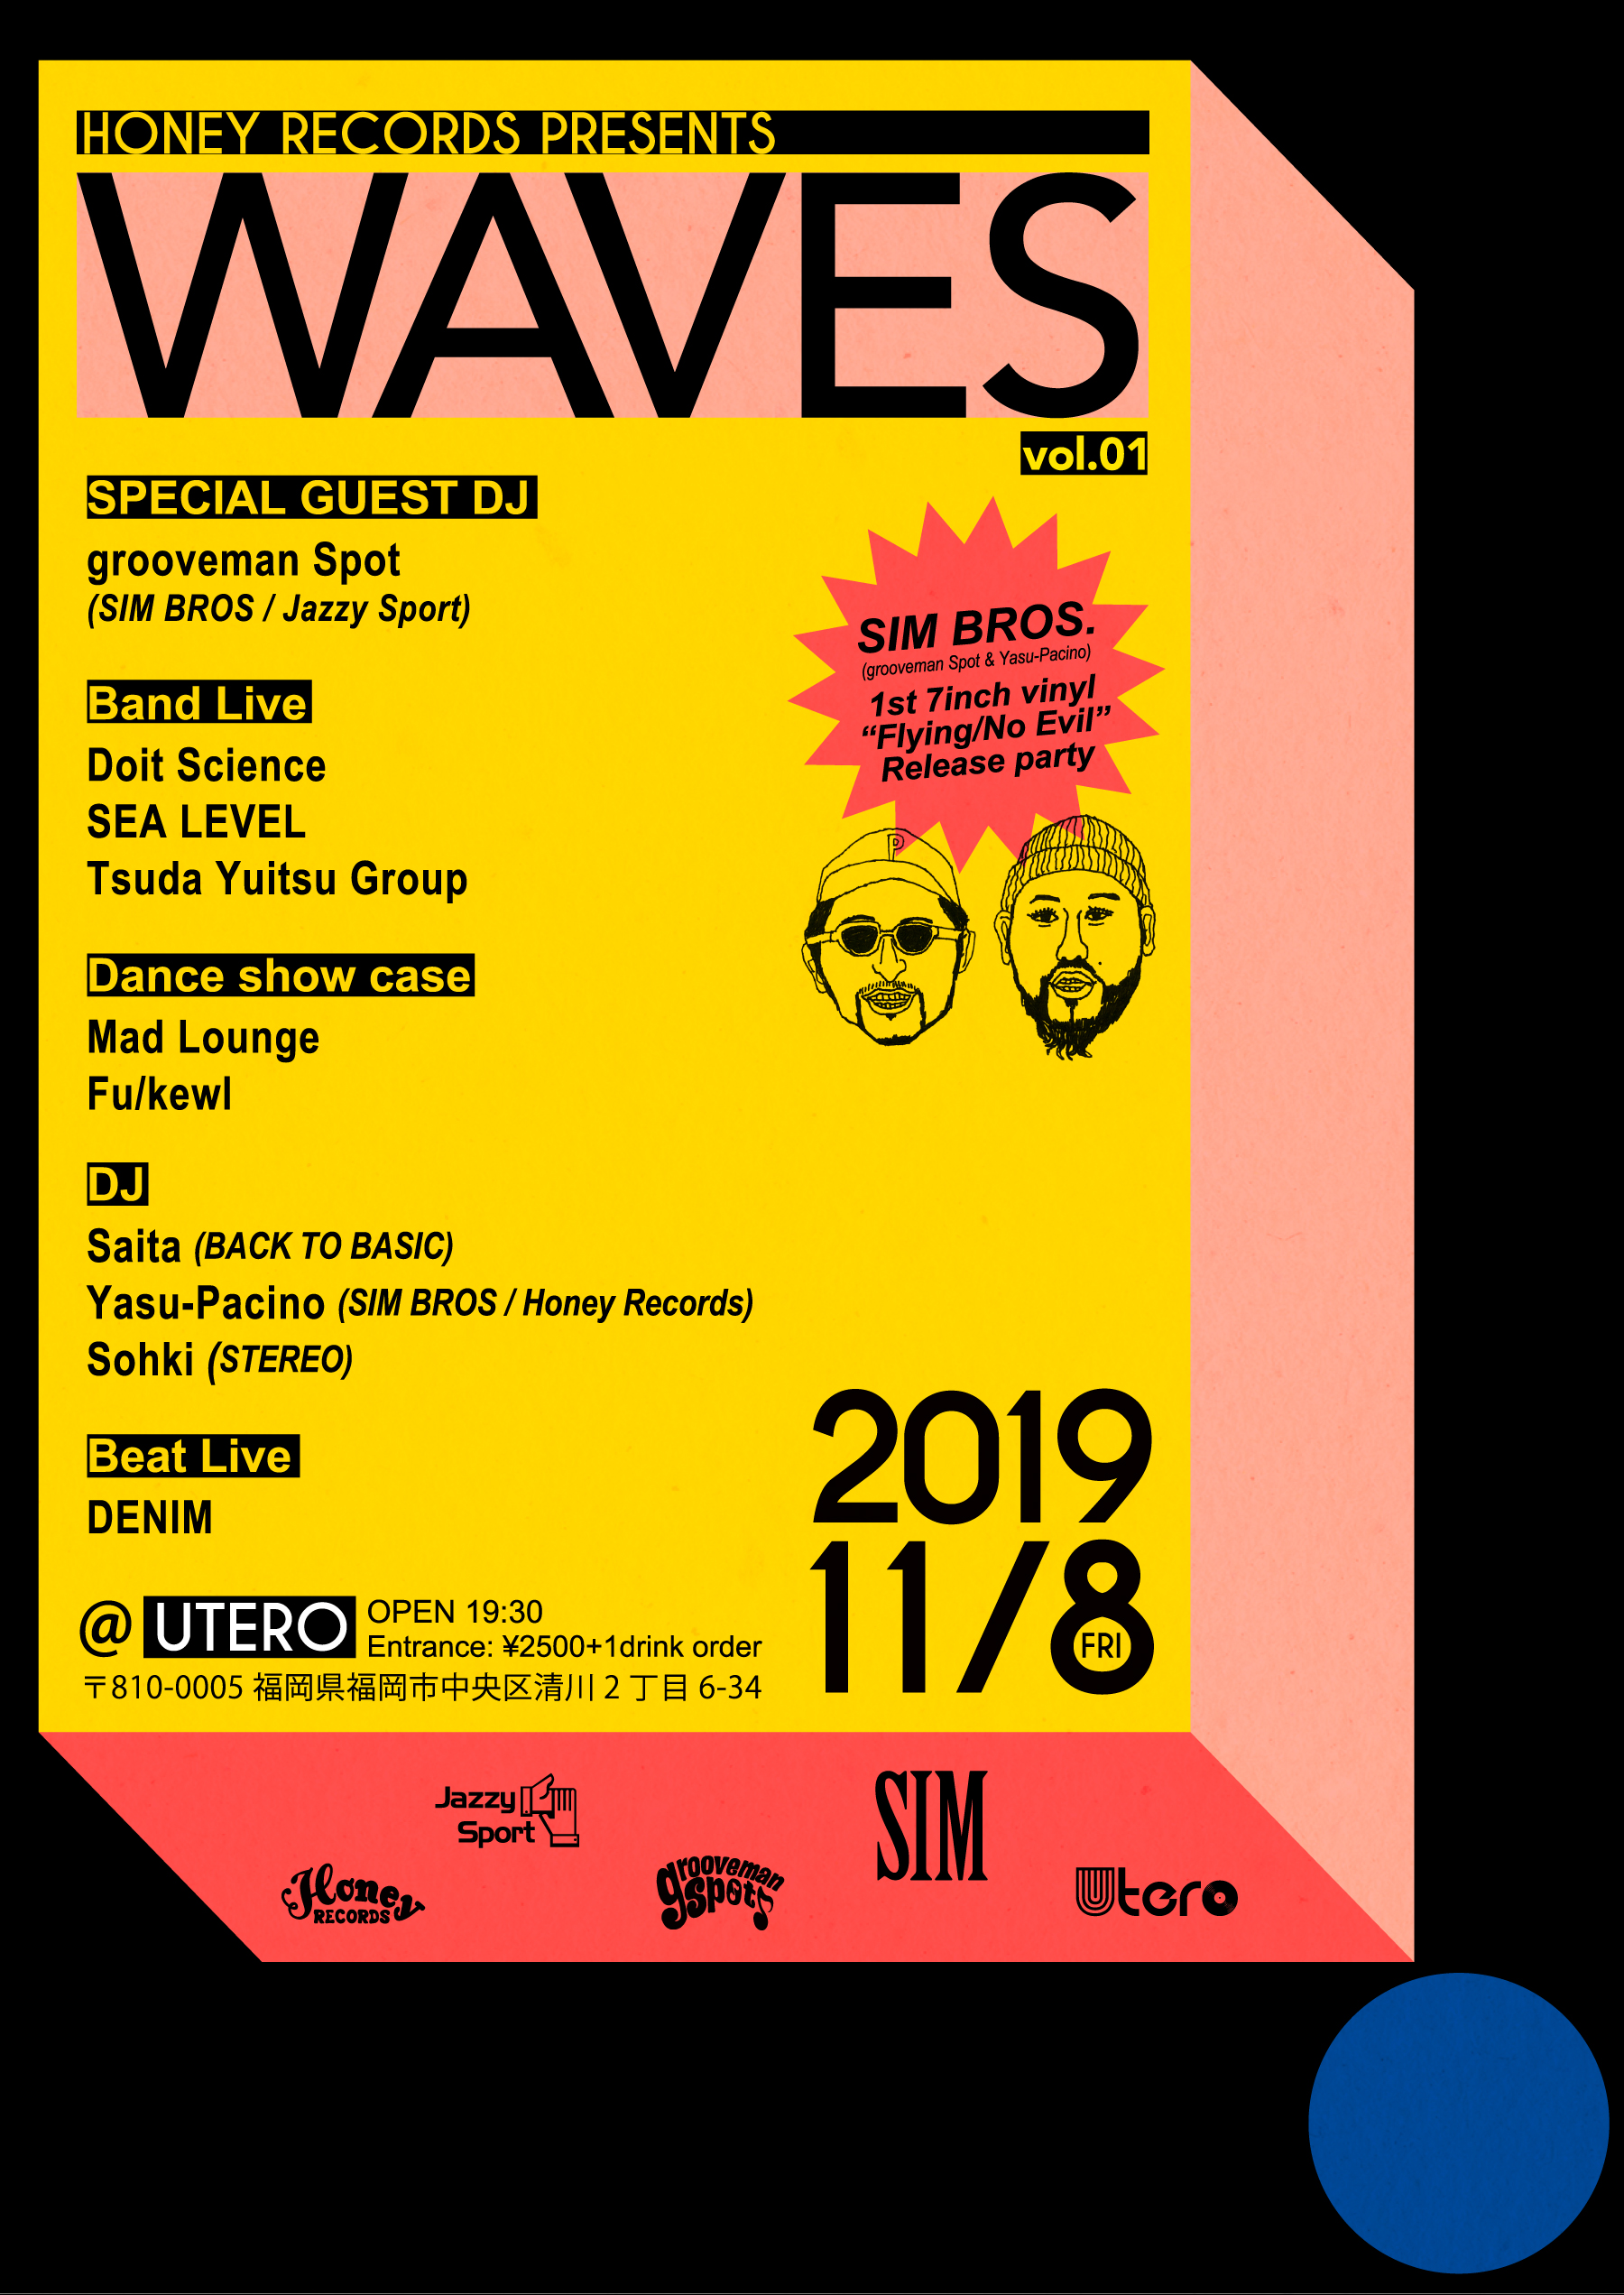 Honey Records presents “WAVES vol.1” at UTERO 福岡 